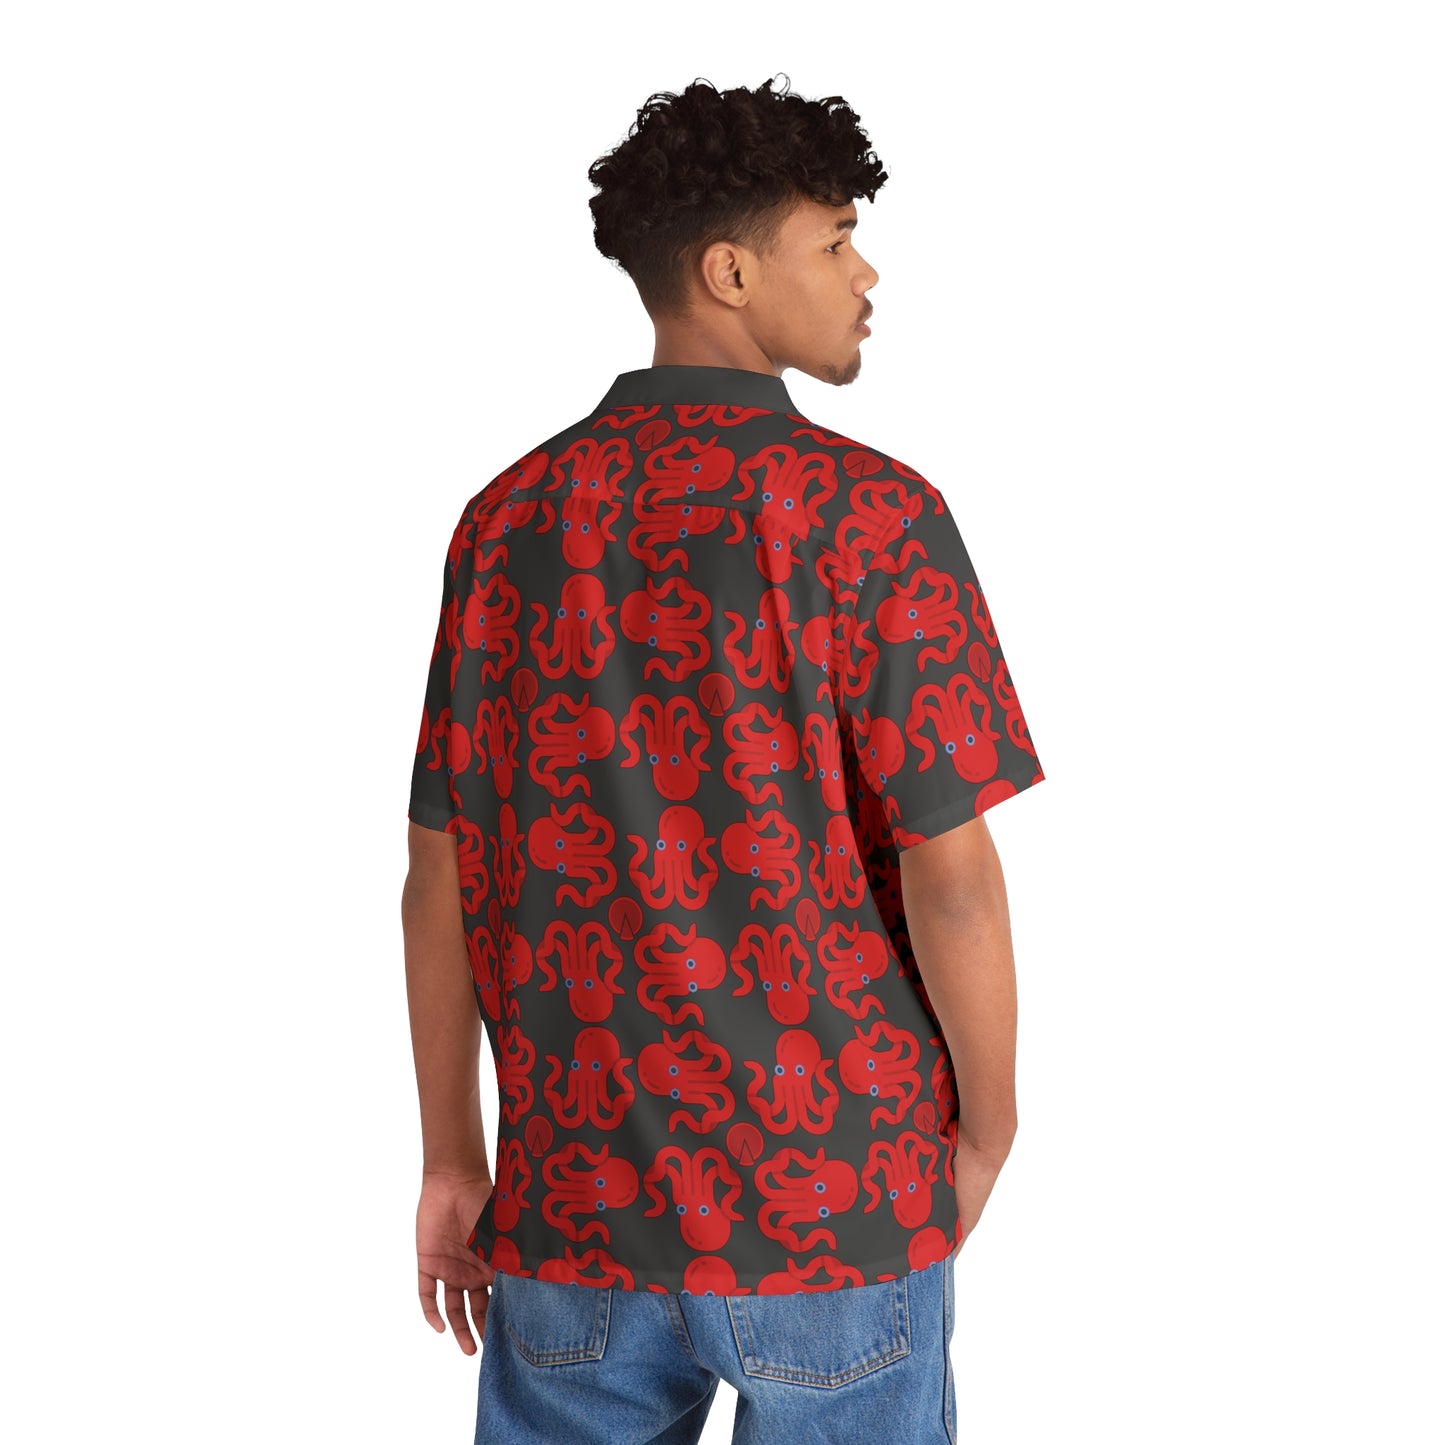 Octopie - Big Print - Black 000000 - Men's Hawaiian Shirt